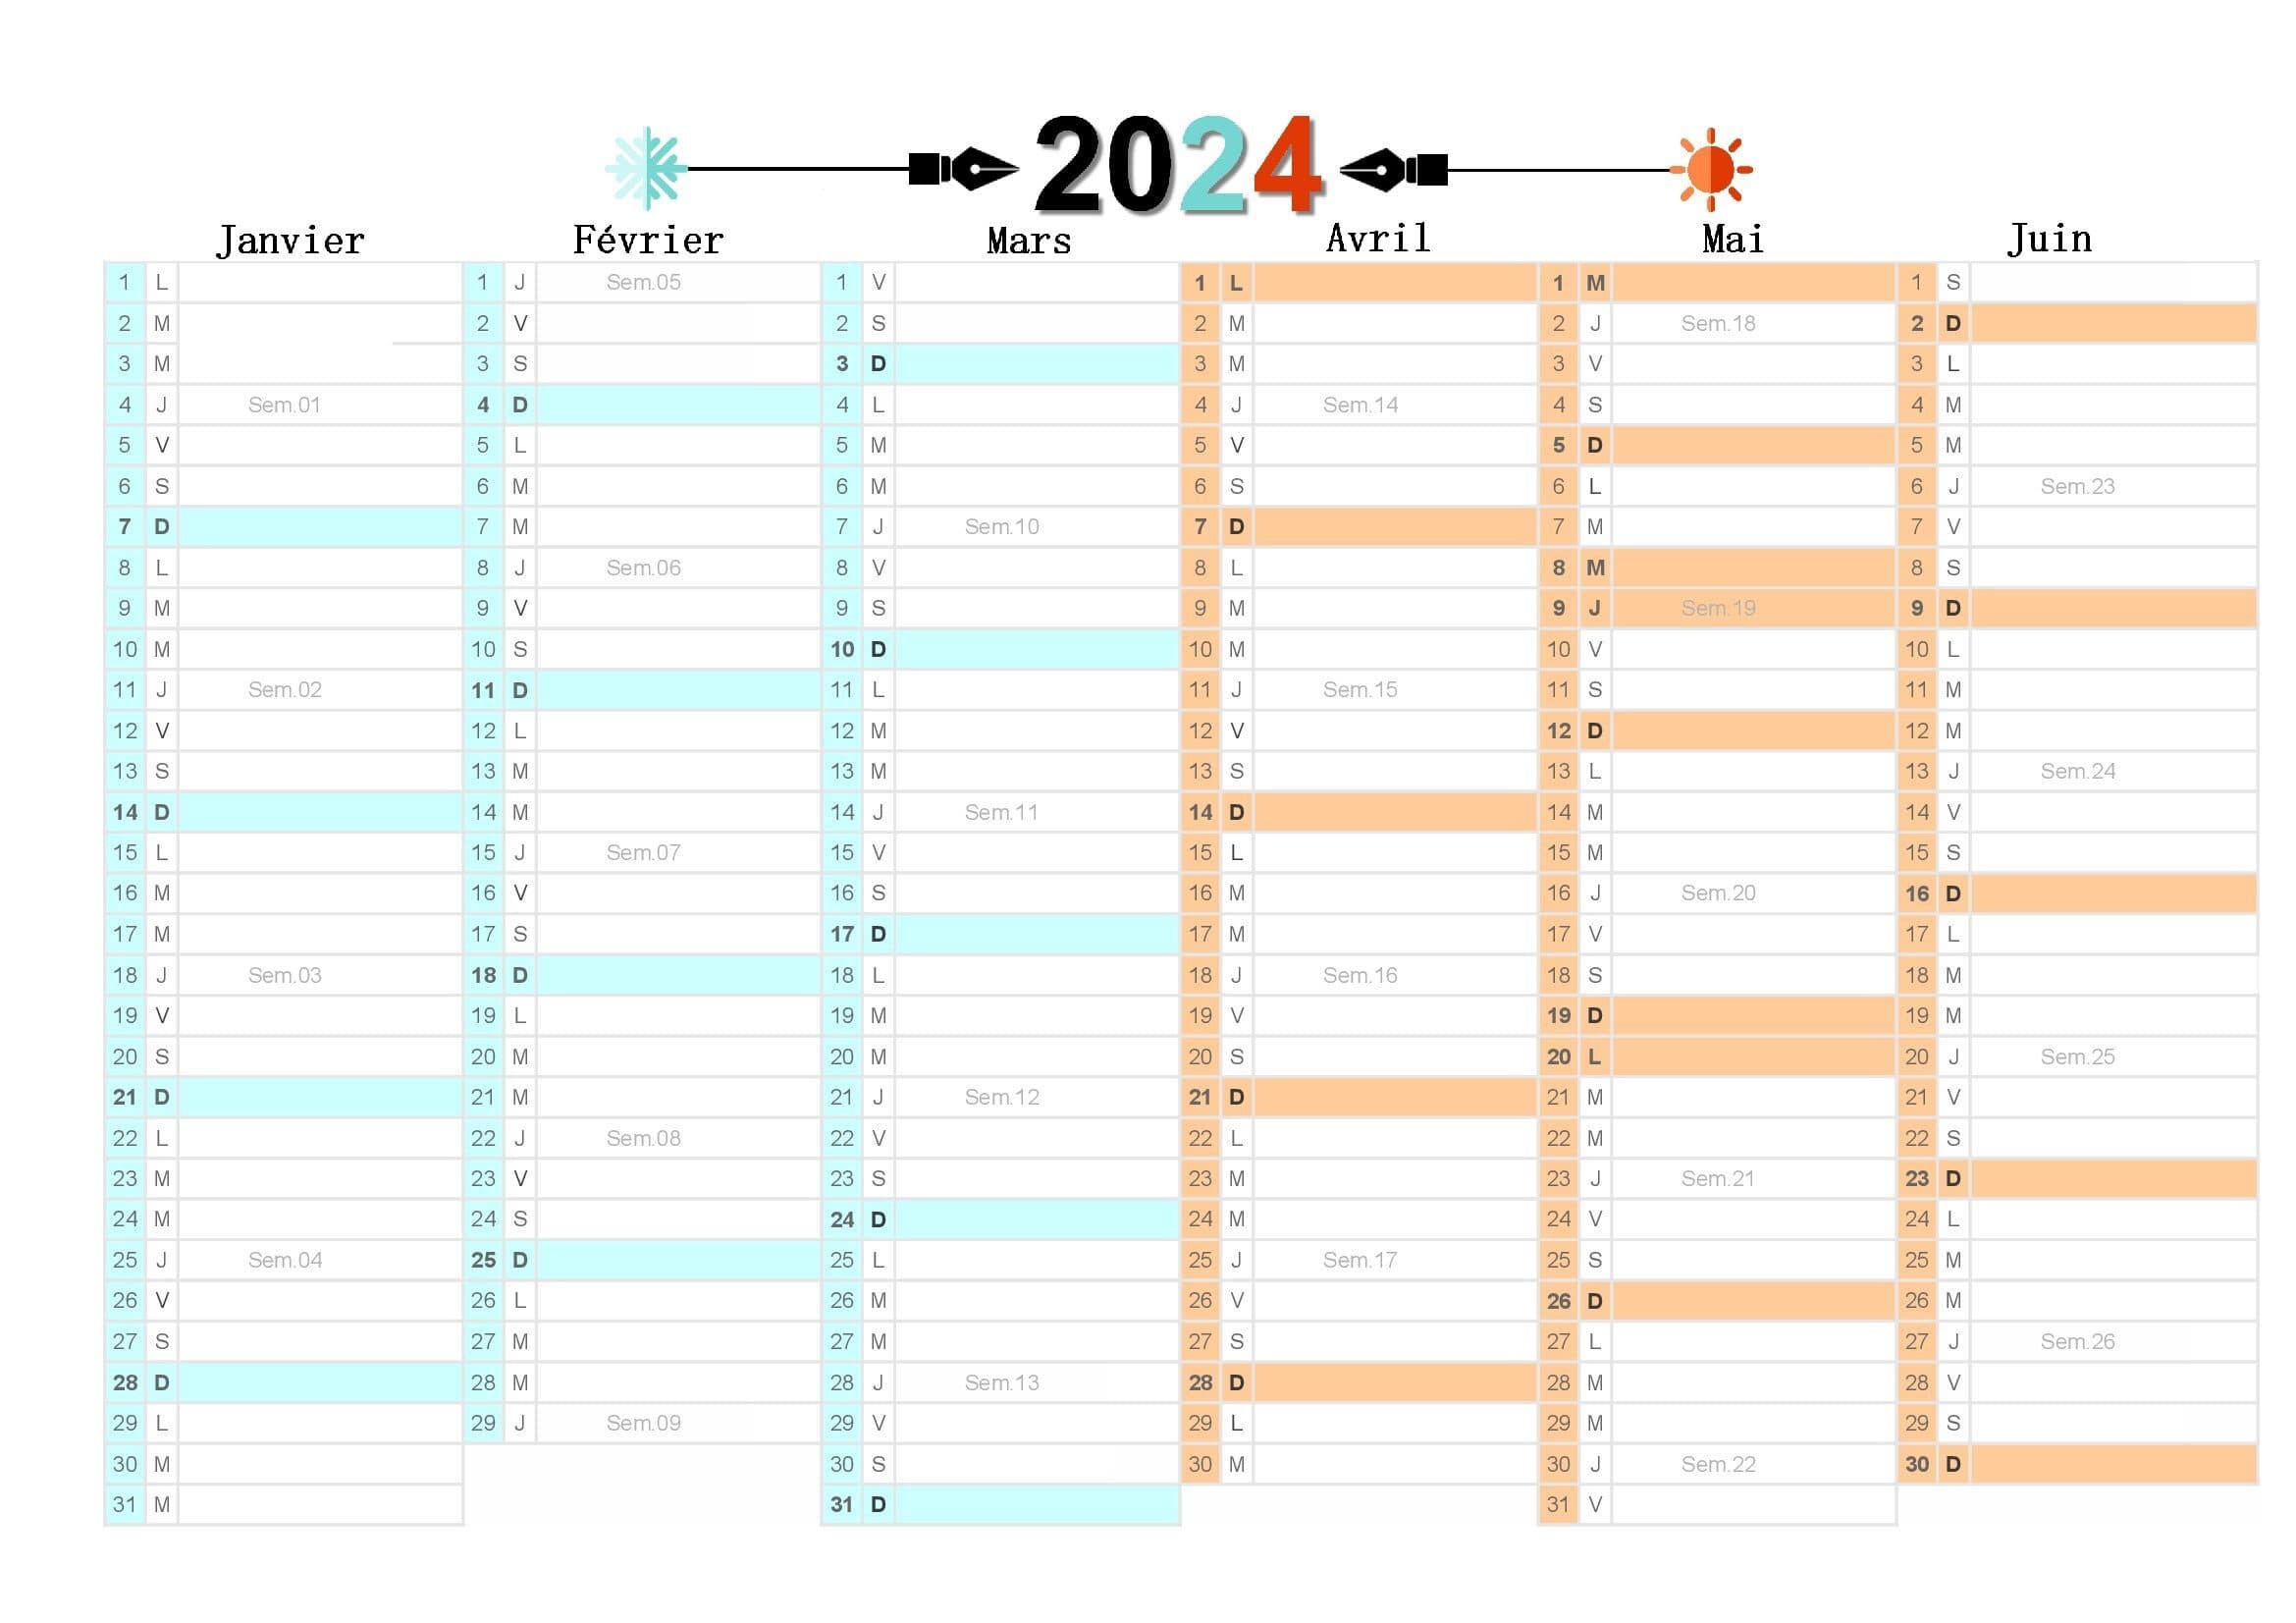 Calendrier 2024 à imprimer, planner 2024, calendrier mensuel, a4,  minimaliste - Un grand marché